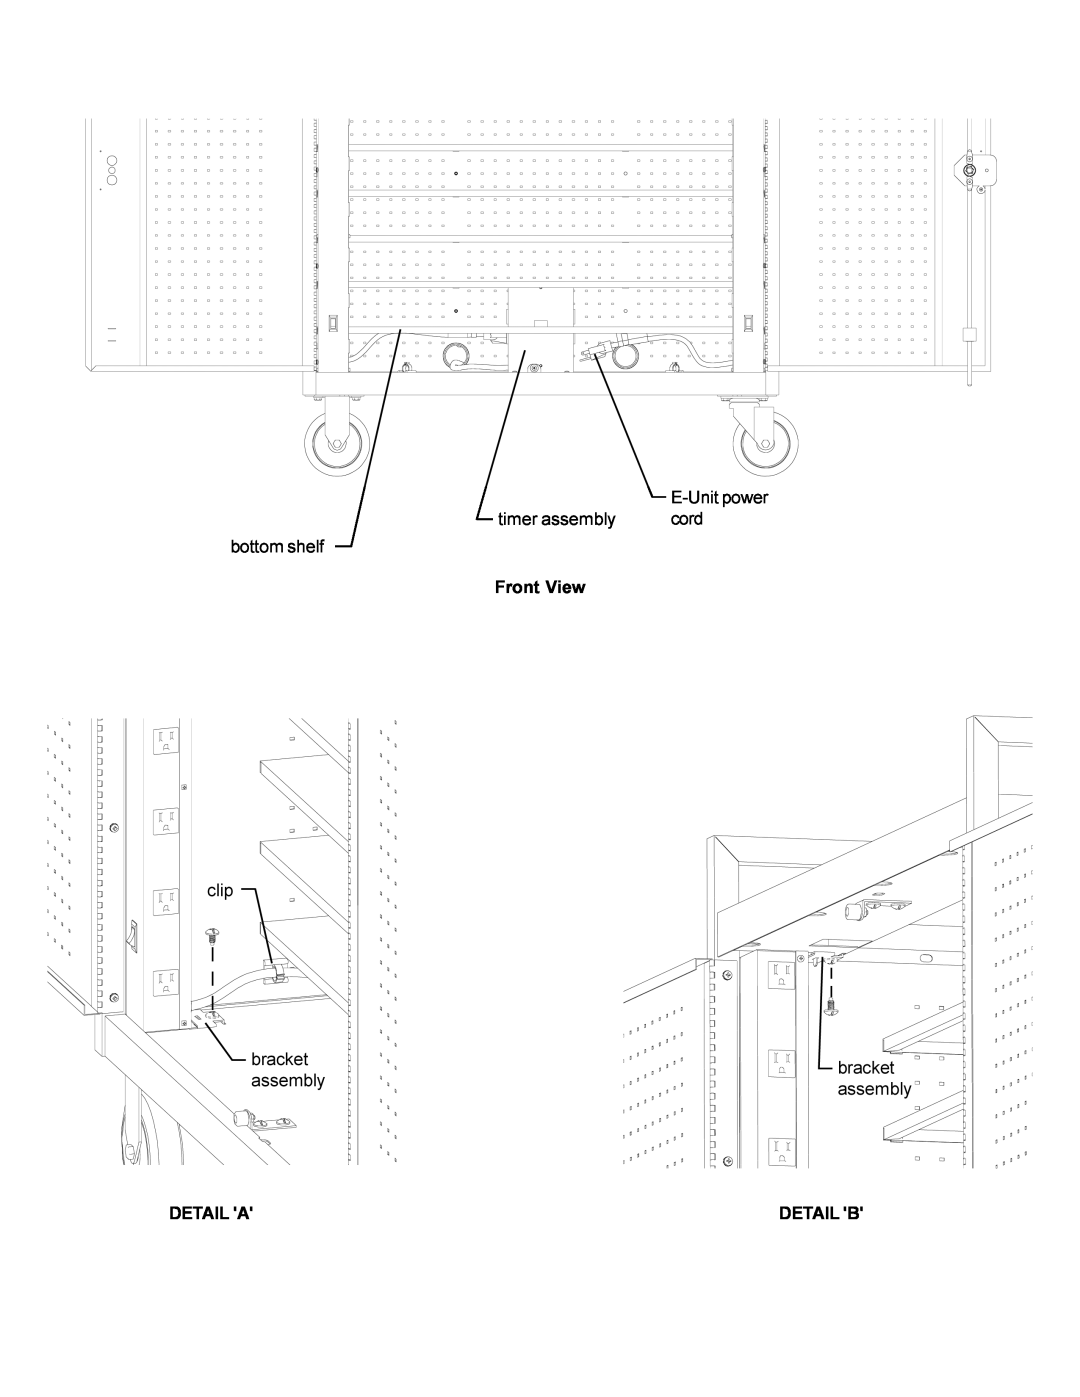 Bretford lap18eulba manual E-Unitpower, timer assembly, cord, bottom shelf, Front View, clip, bracket, Detail A, Detail B 